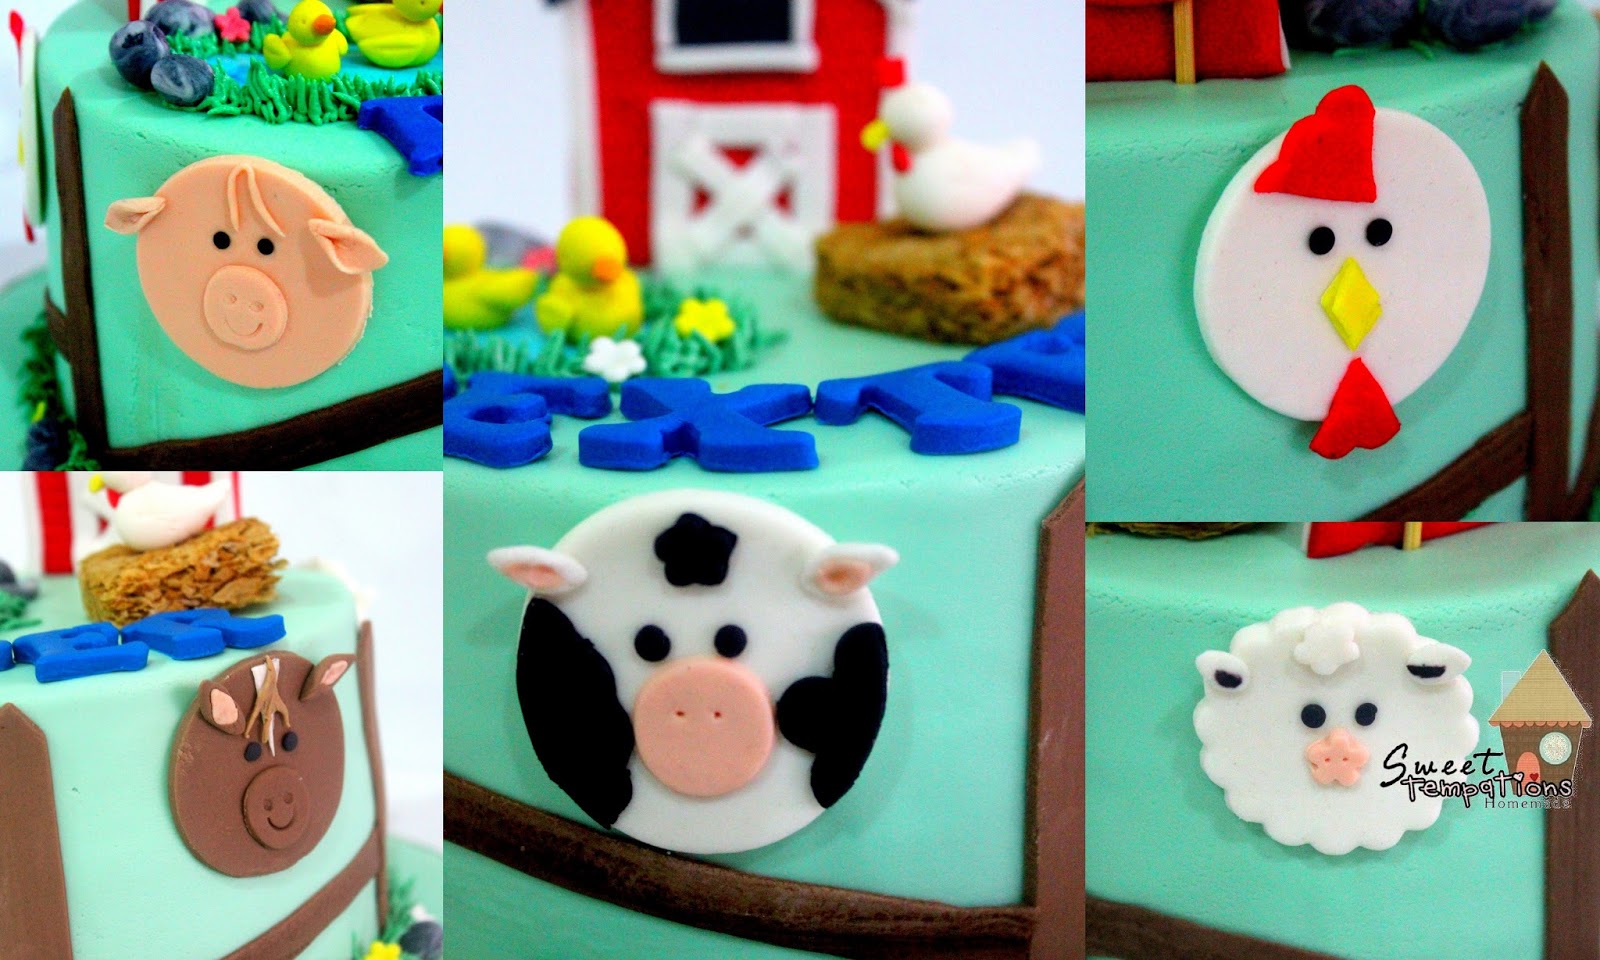 Sweet Temptations Homemade Cakes & Pastry: Farm Animal Cake